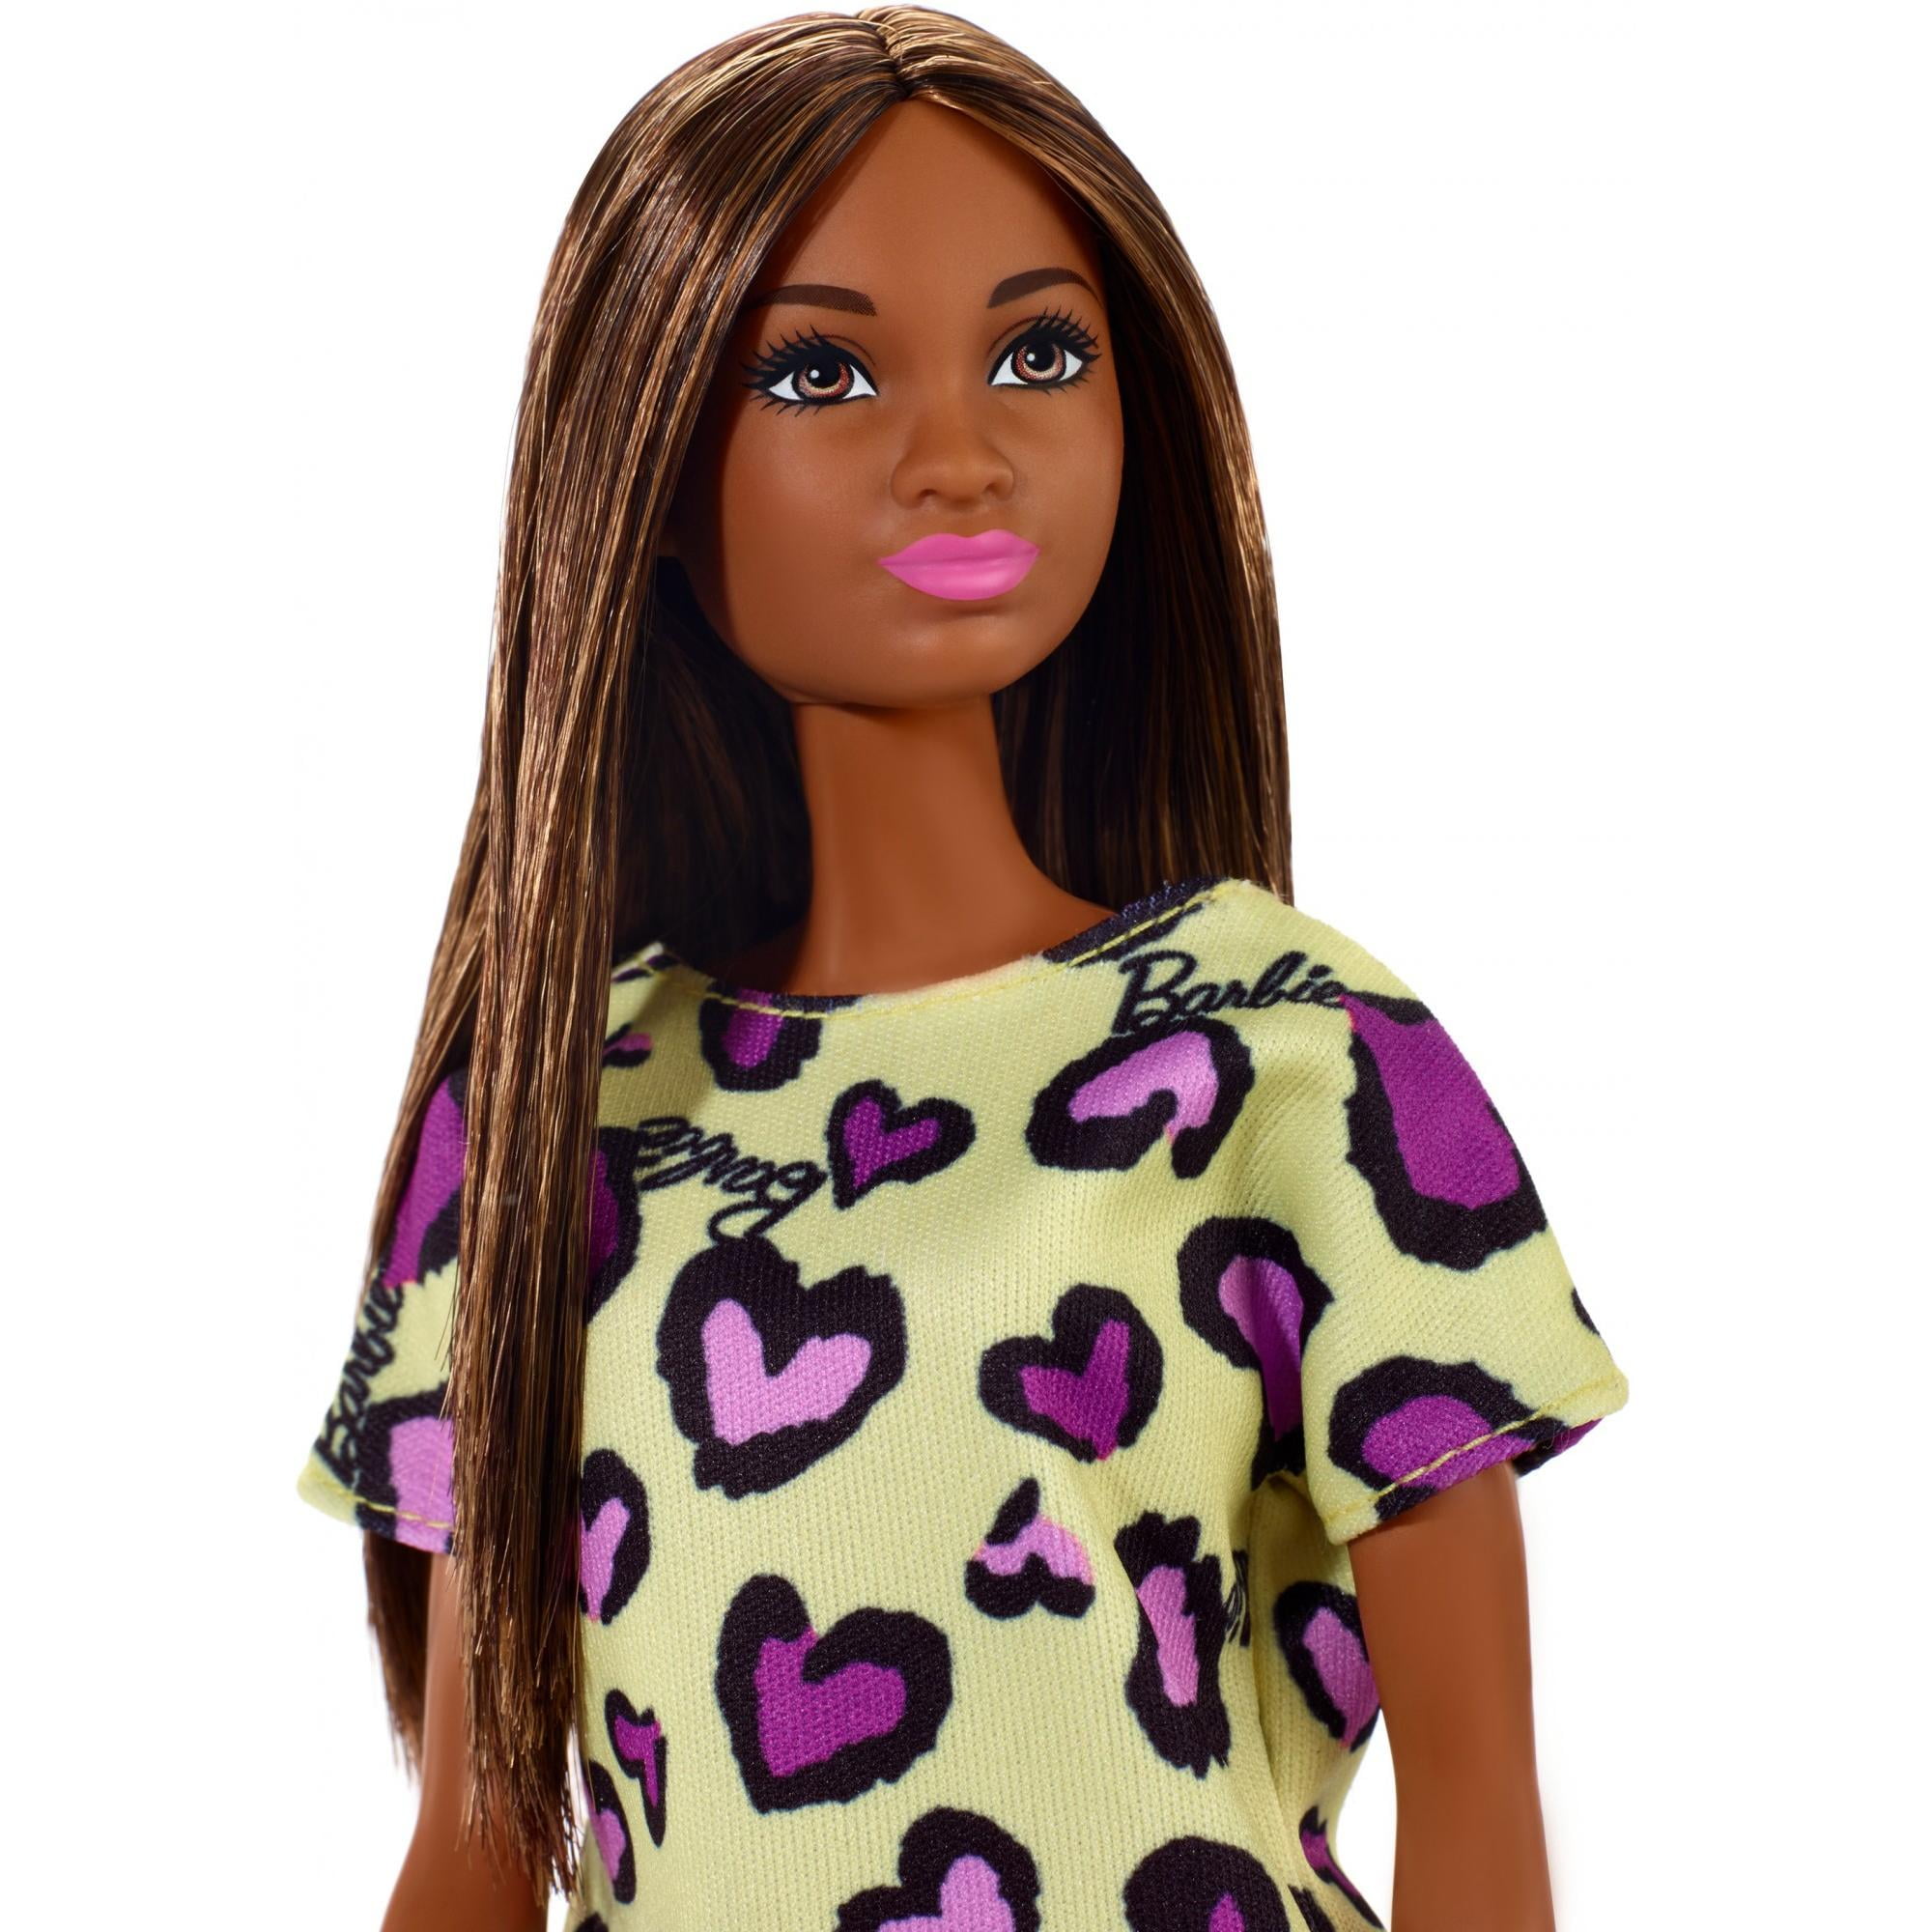 Barbie Doll Blonde Chic Fashionista GHW49 Wearing Purple Dress W/ Yellow Hearts for sale online